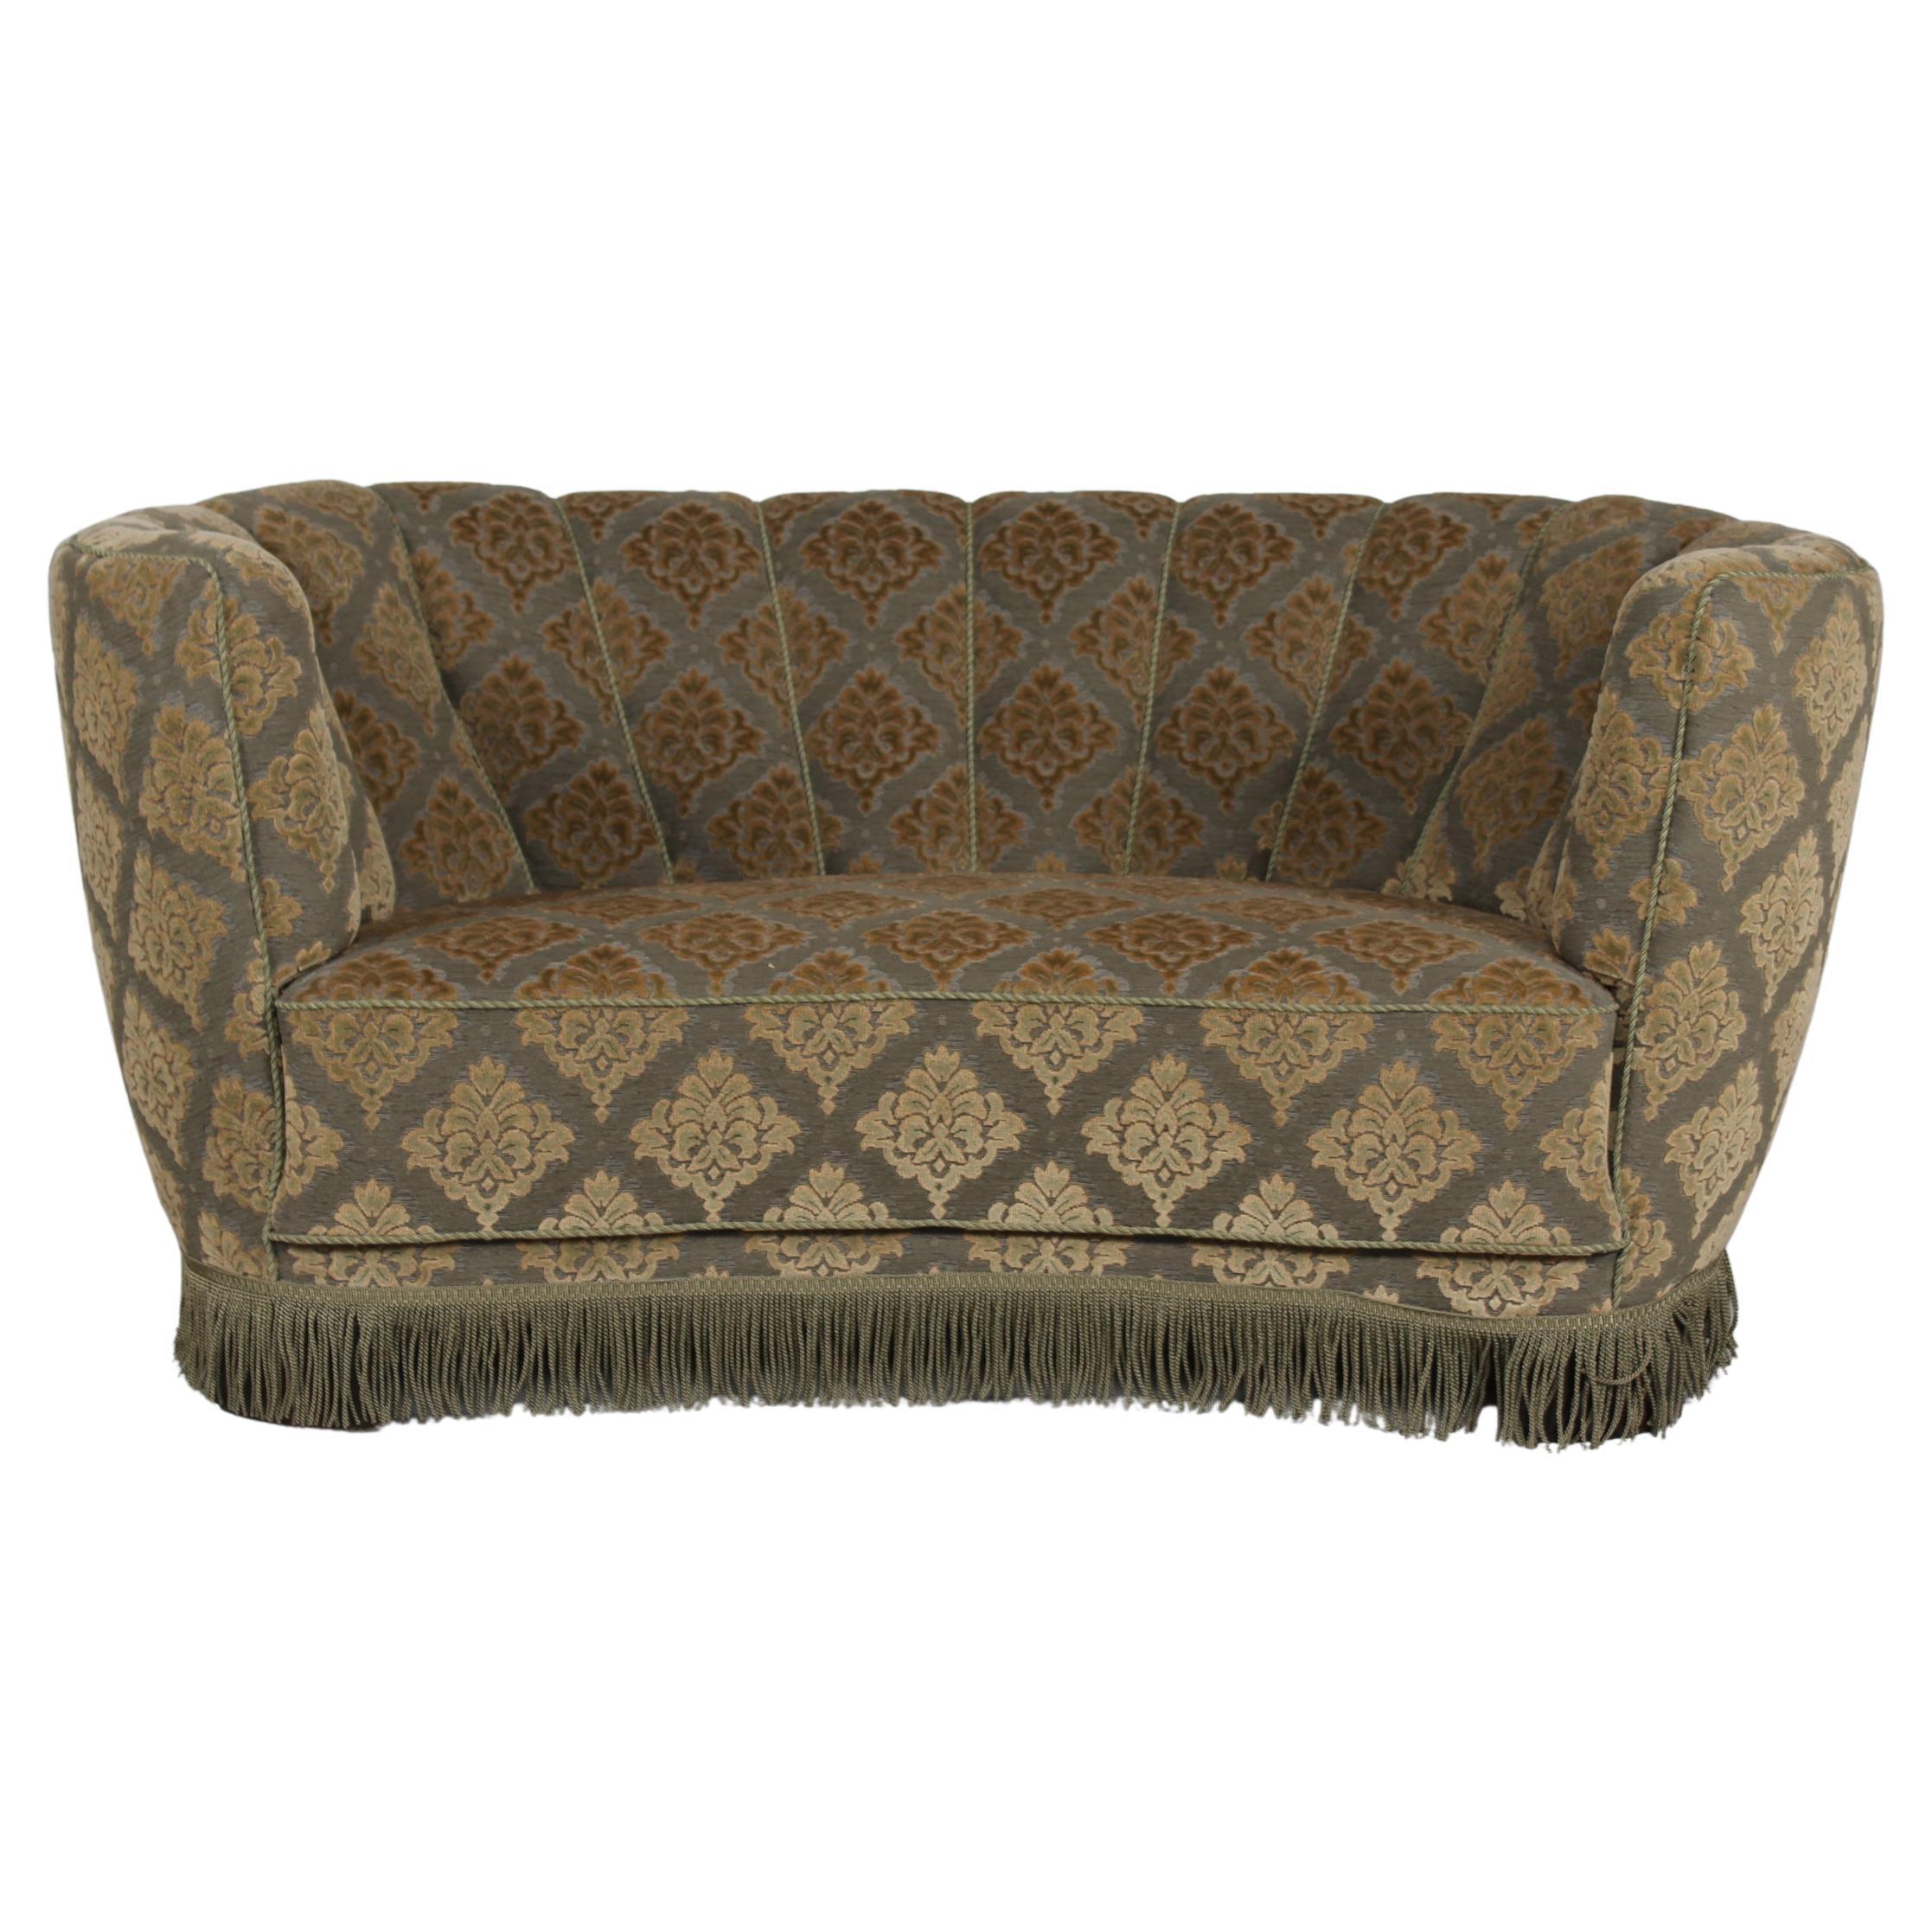 Danish Art Deco Curved Sofa Couch Green Floral Velour Velvet Upholstery, 1950s For Sale